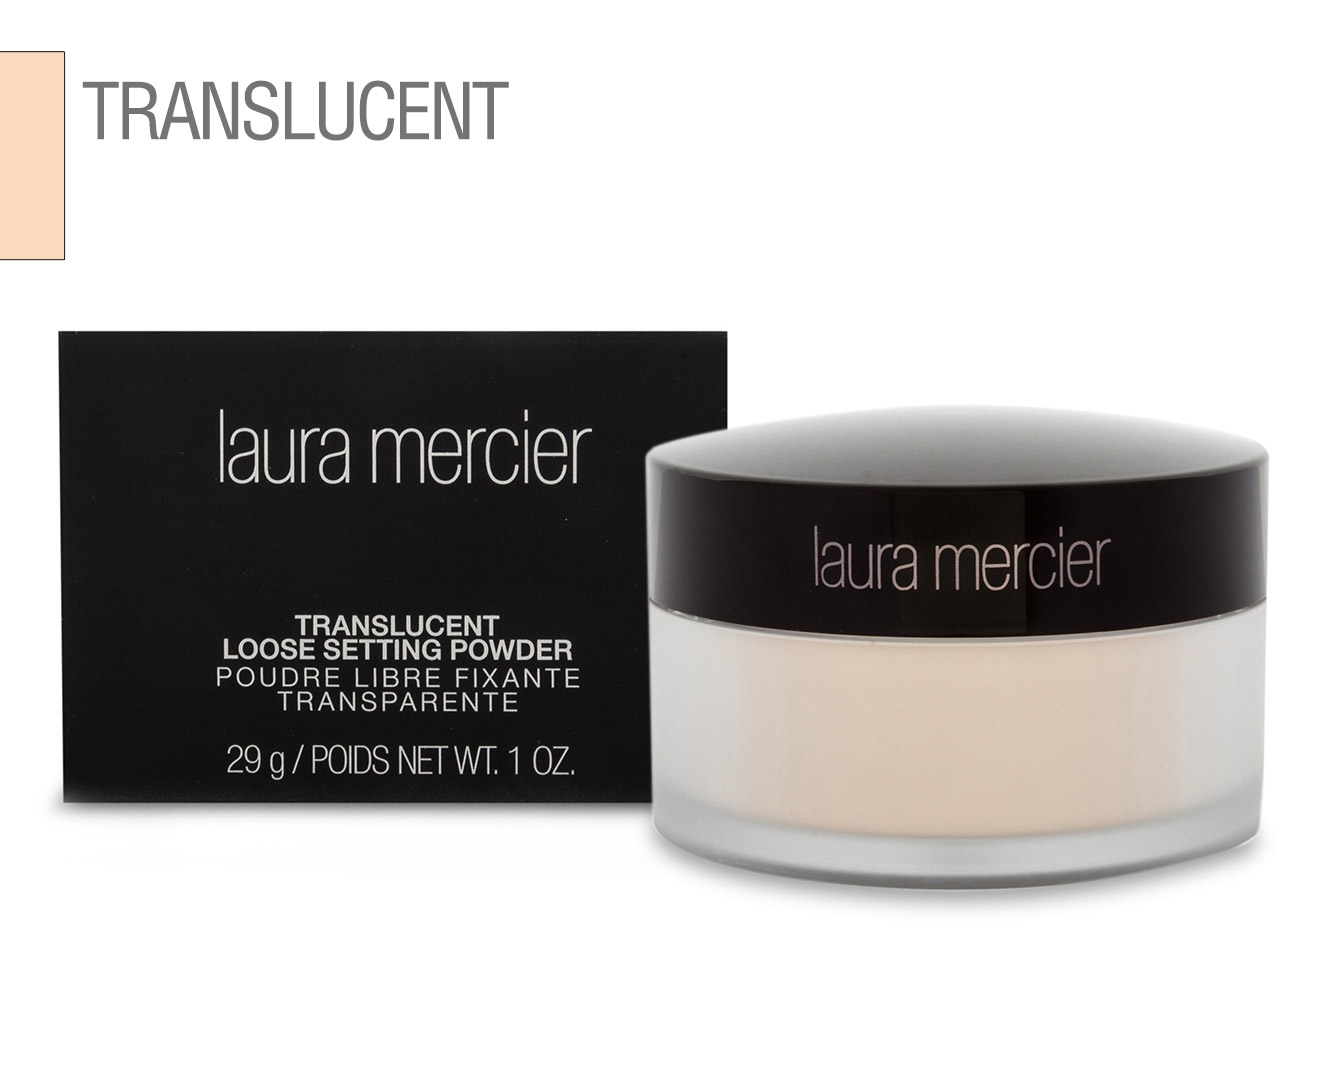 laura mercier translucent loose setting powder